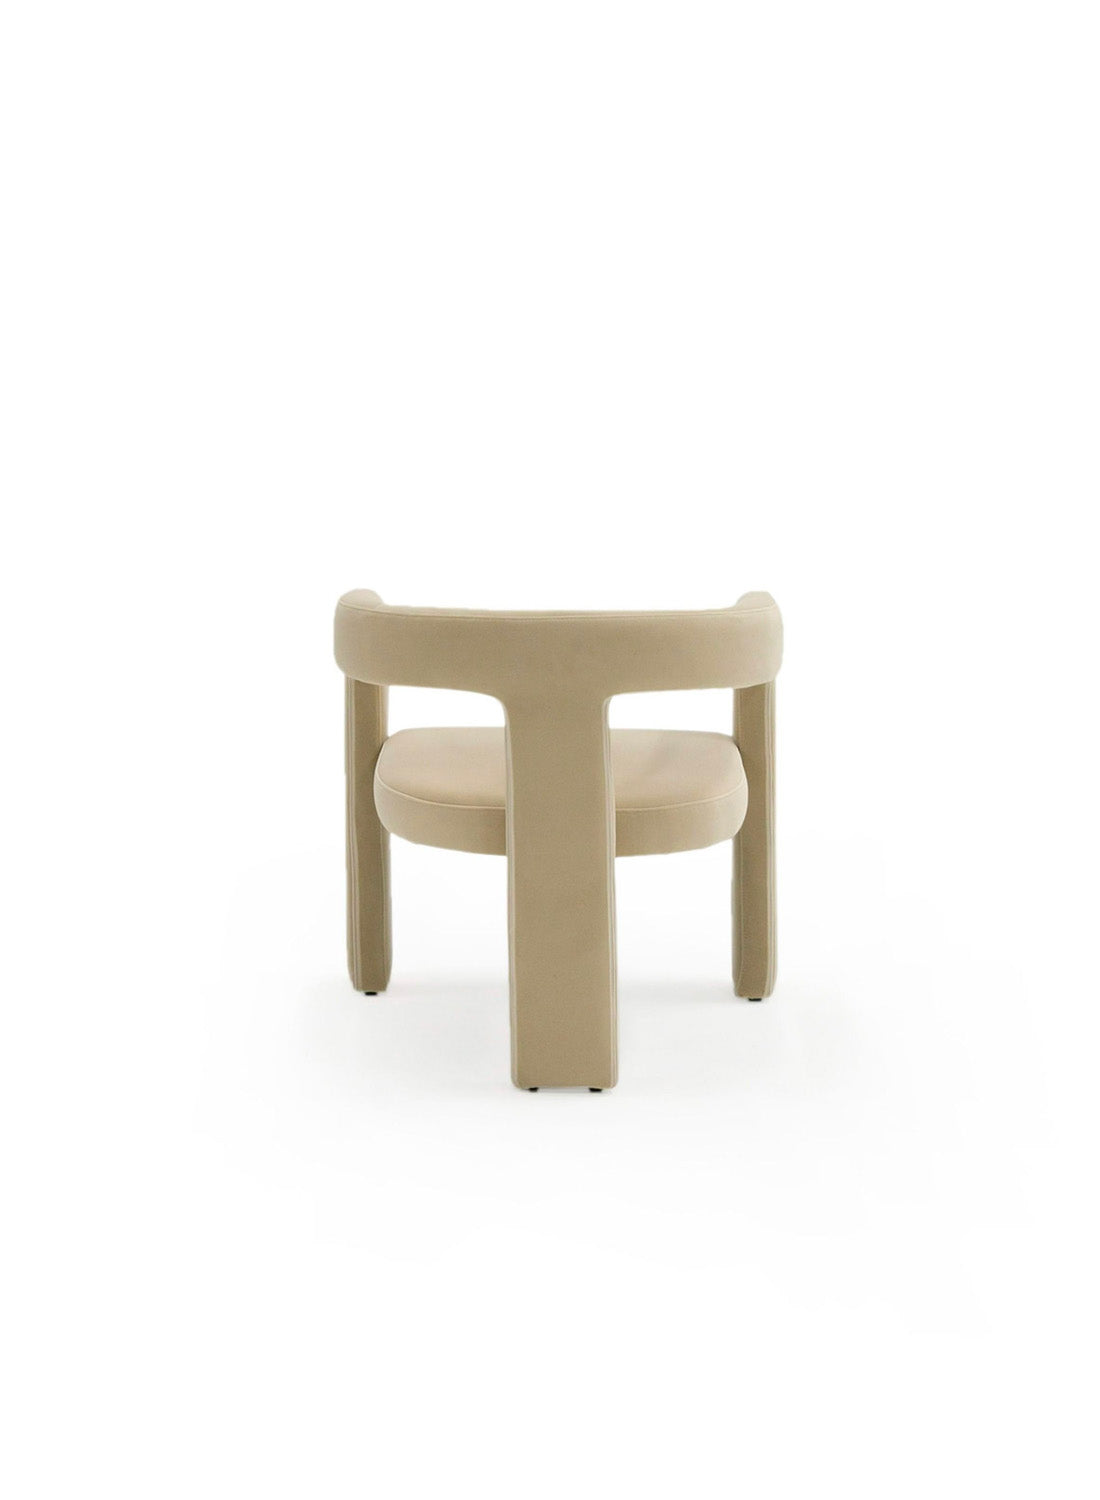 Lennon Dining Chair, beige